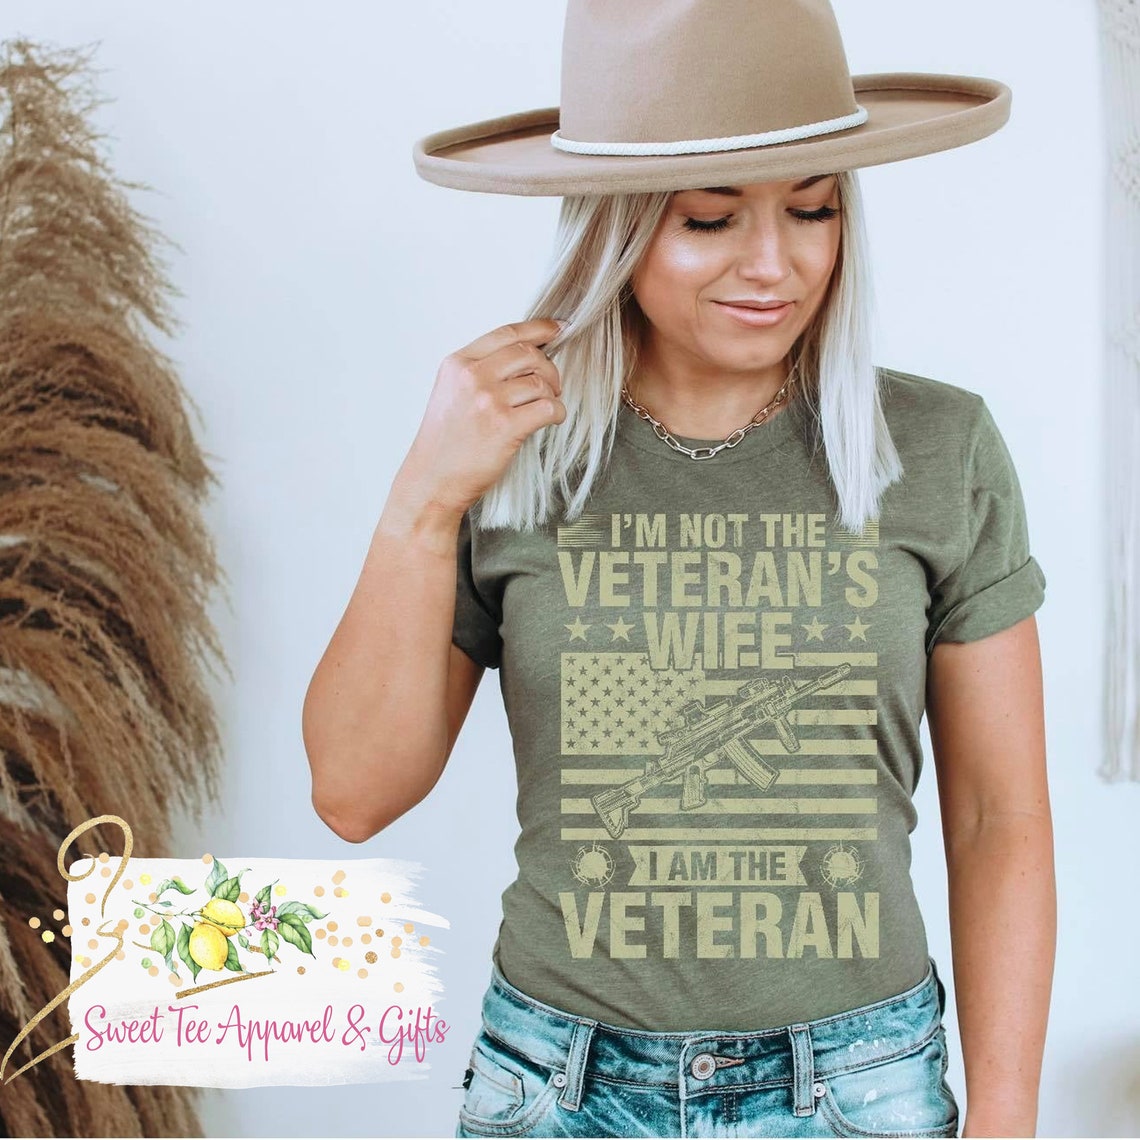 I'm not the veteran's wife - I am the veteran t-shirt